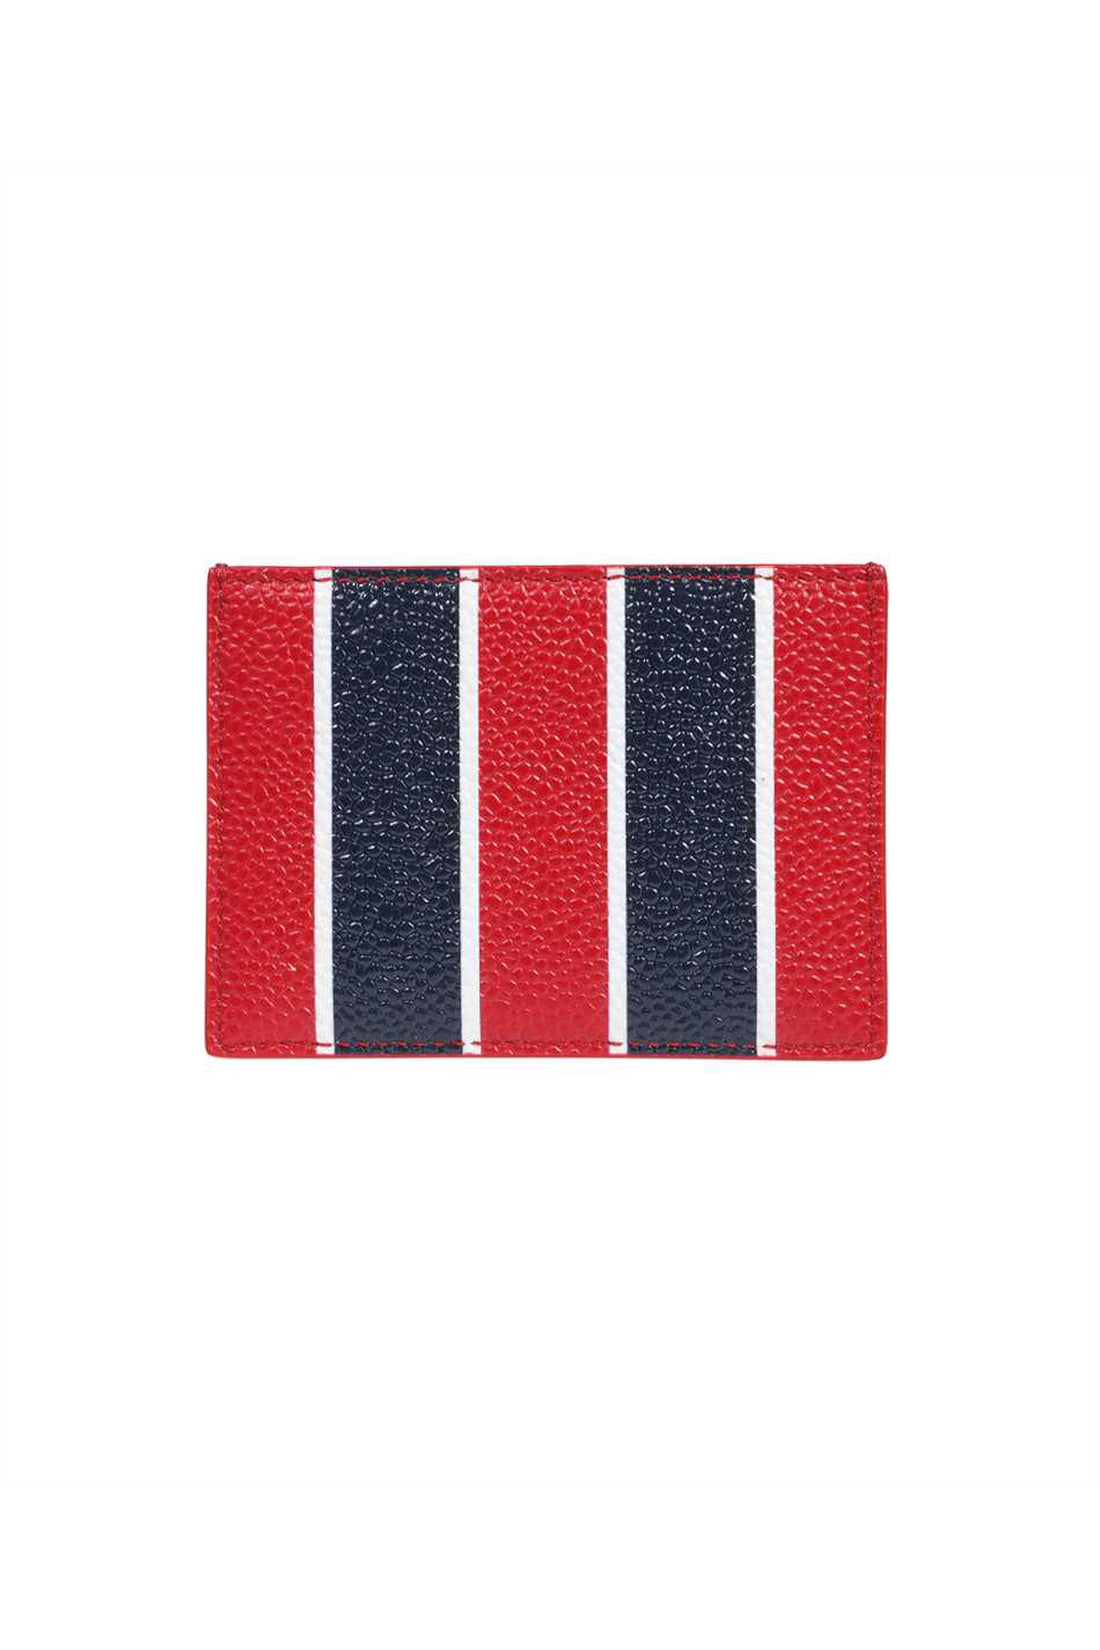 Thom Browne-OUTLET-SALE-Leather card holder-ARCHIVIST